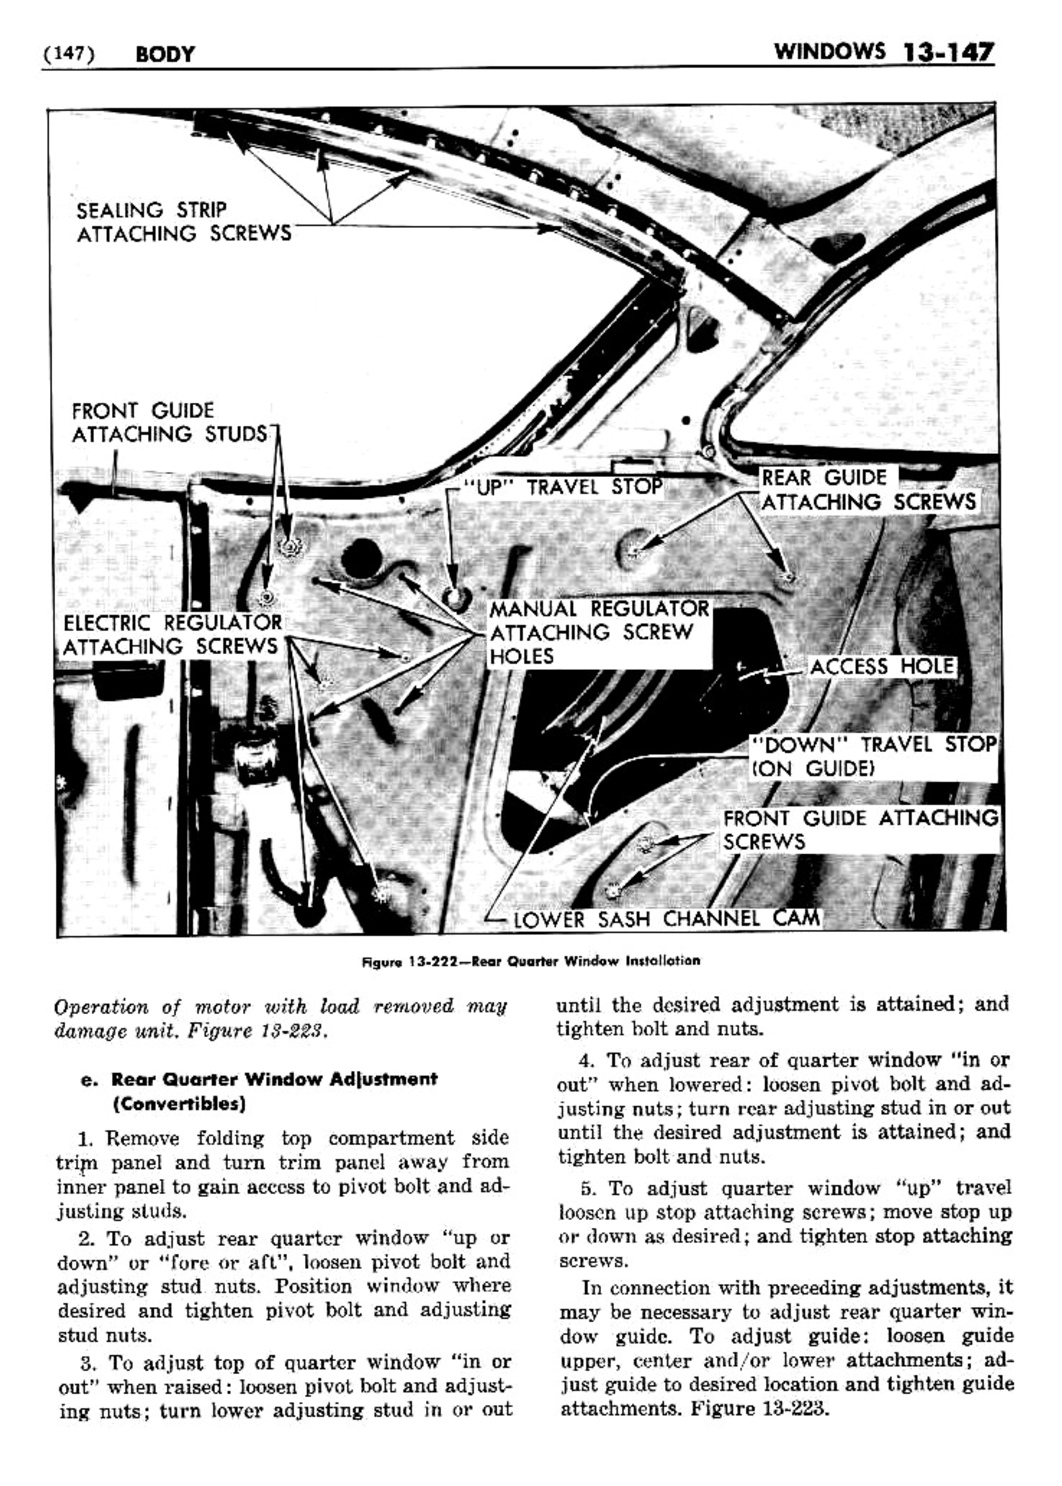 n_1957 Buick Body Service Manual-149-149.jpg